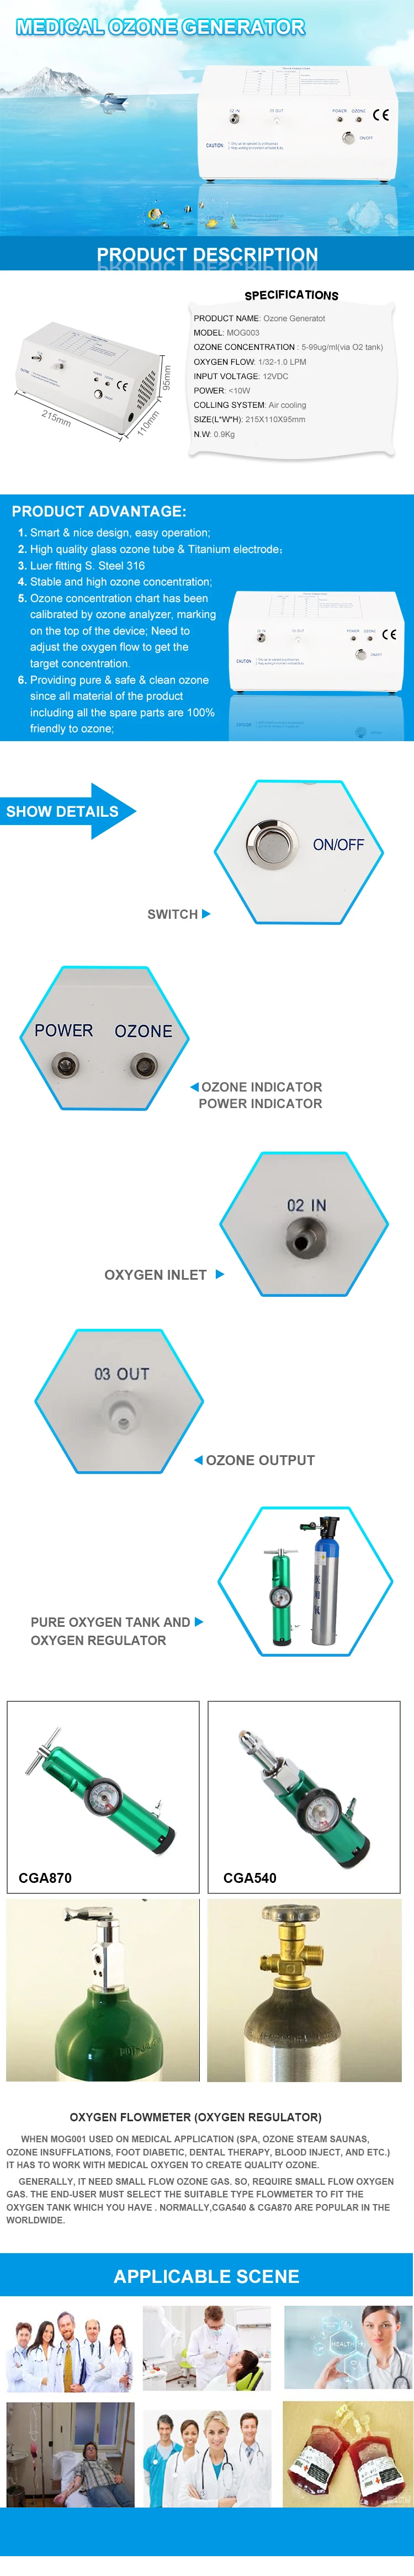 Генератор озона/Озонатор 12 V MOG003 used on Ozone therapy